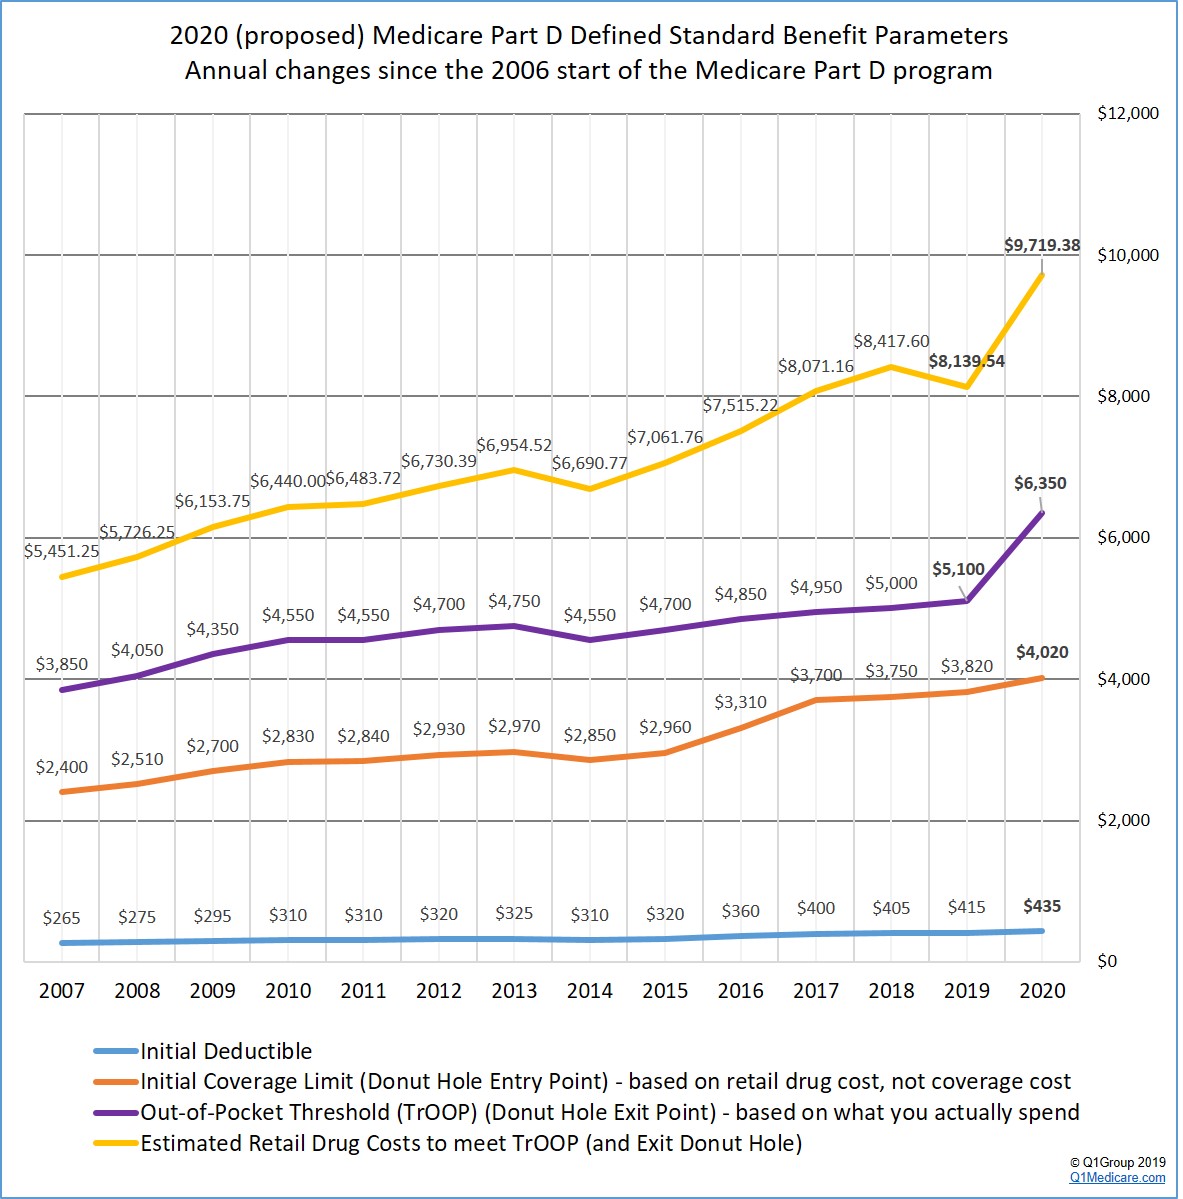 2020 Final Medicare Part D defined standard benefit parameters -- annual changes since 2006